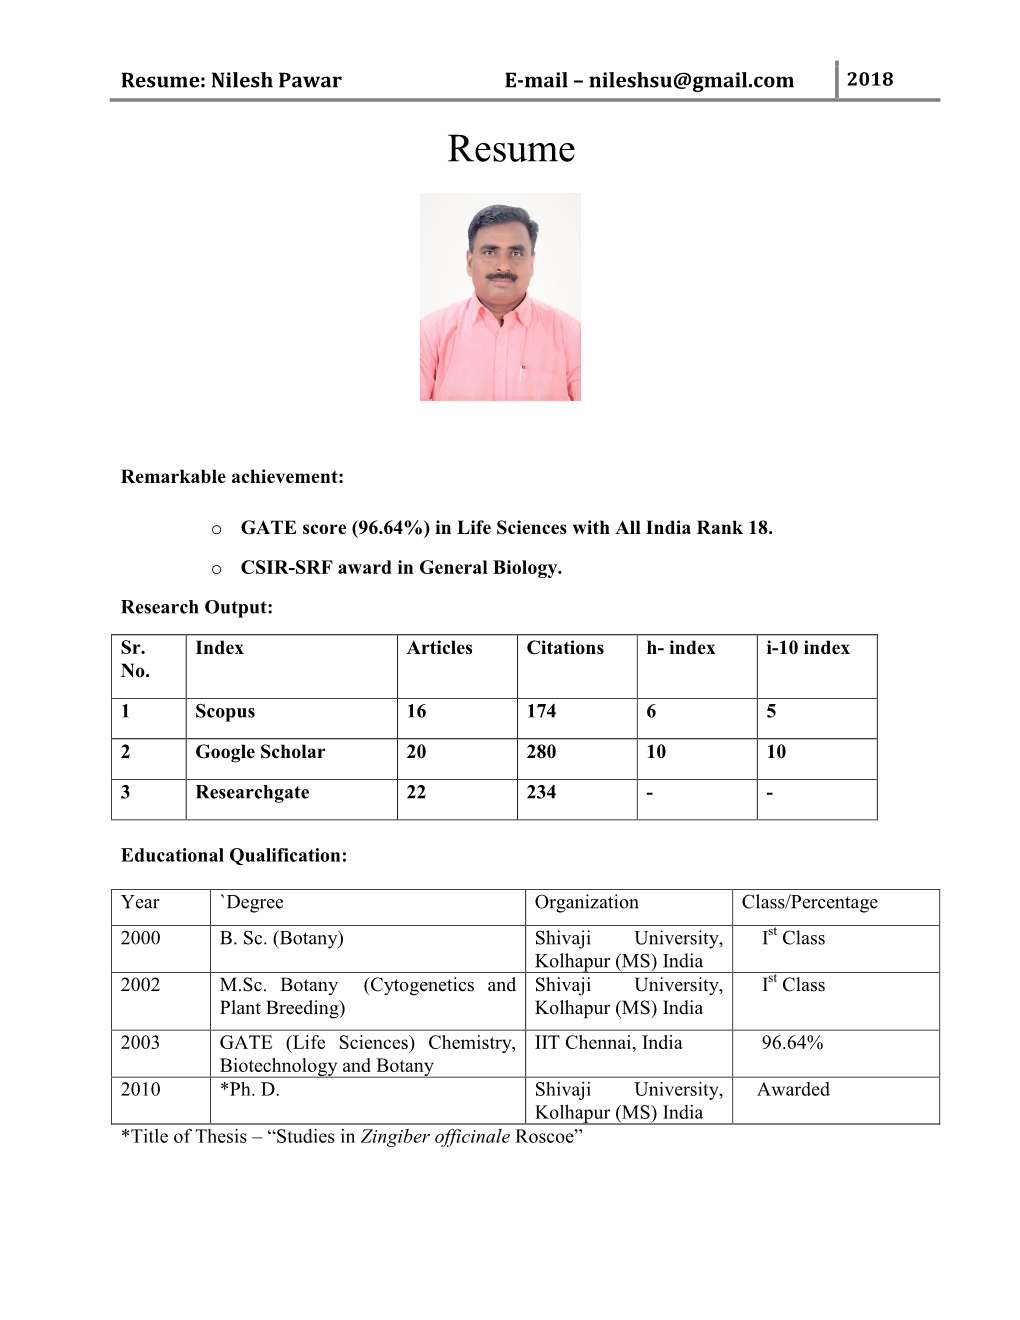 Resume: Nilesh Pawar E-Mail – Nileshsu@Gmail.Com 2018